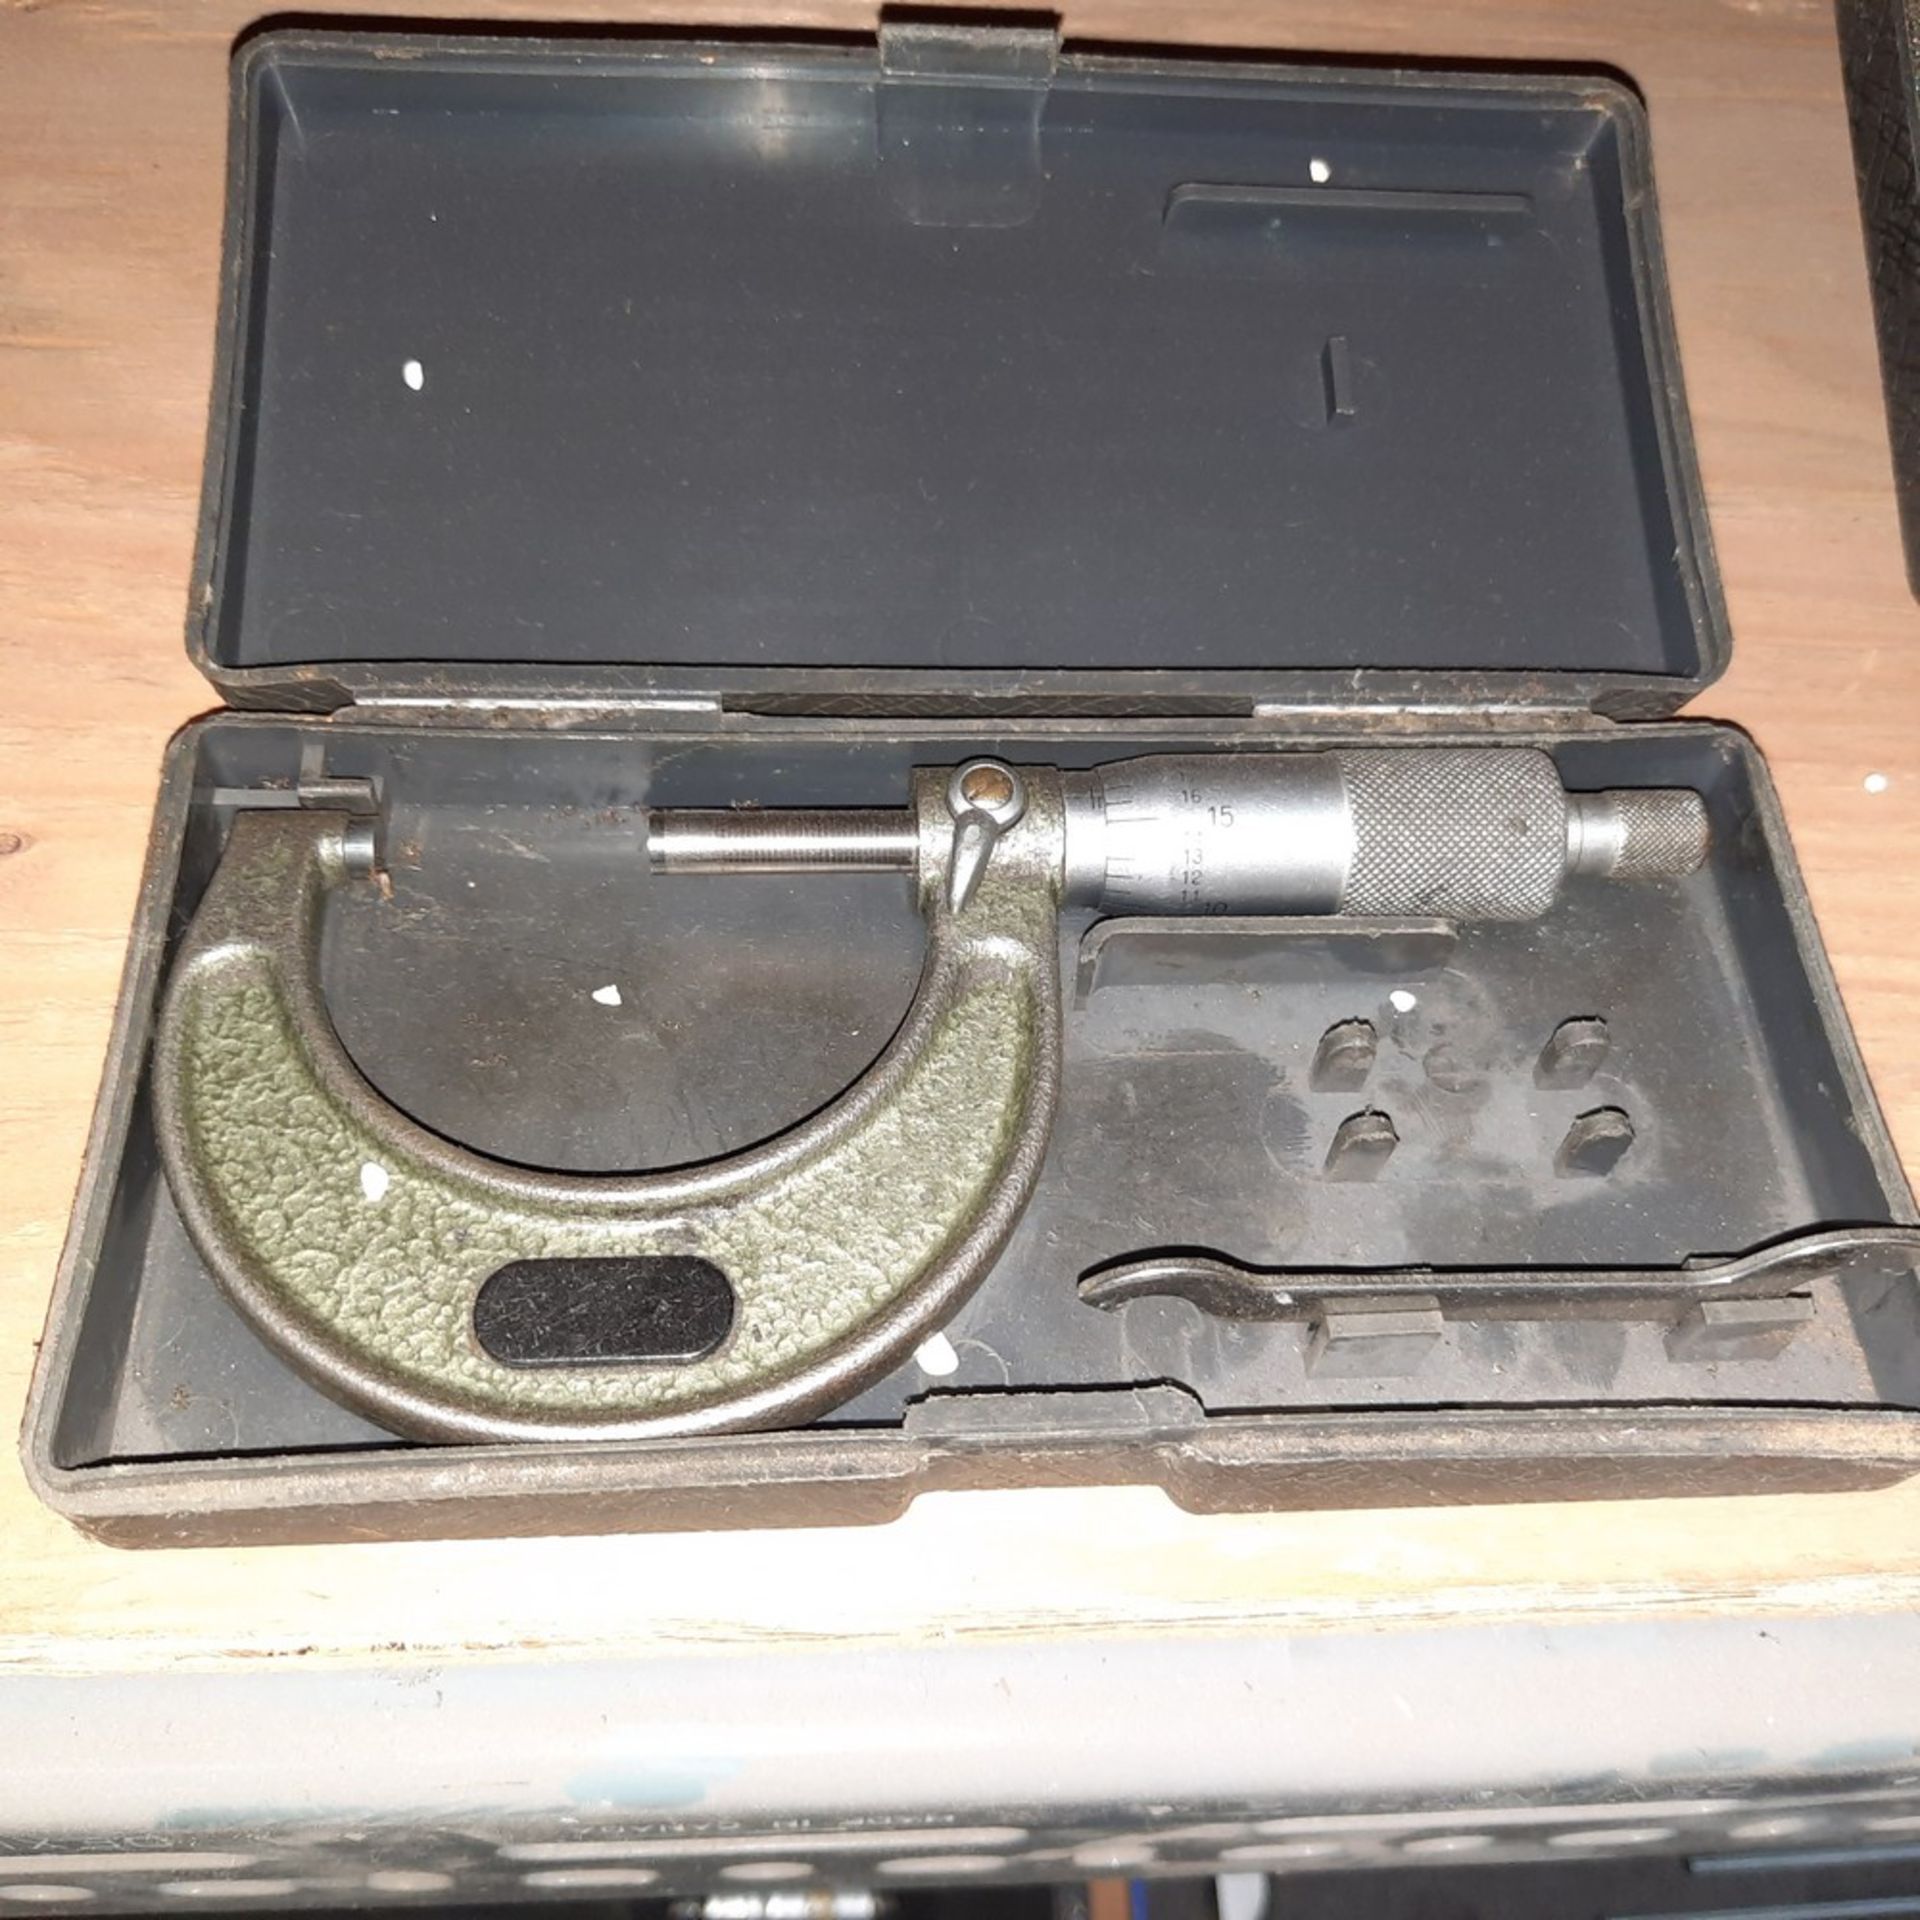 MITUTOYO Micrometers, c/w Cases - Image 2 of 4